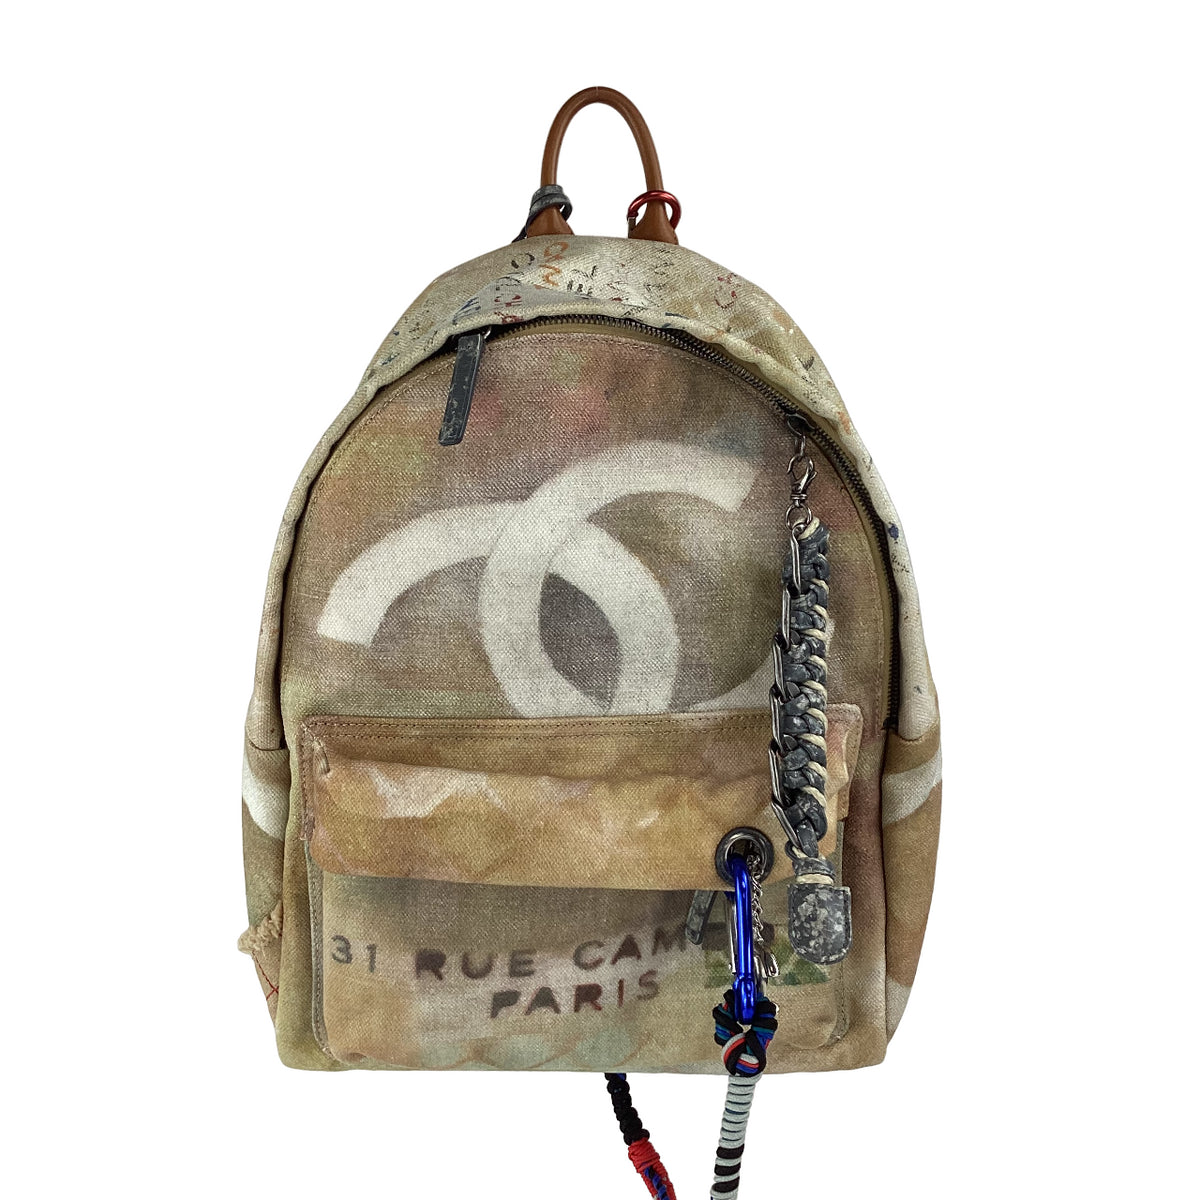 Chanel Graffiti Paint Backpack